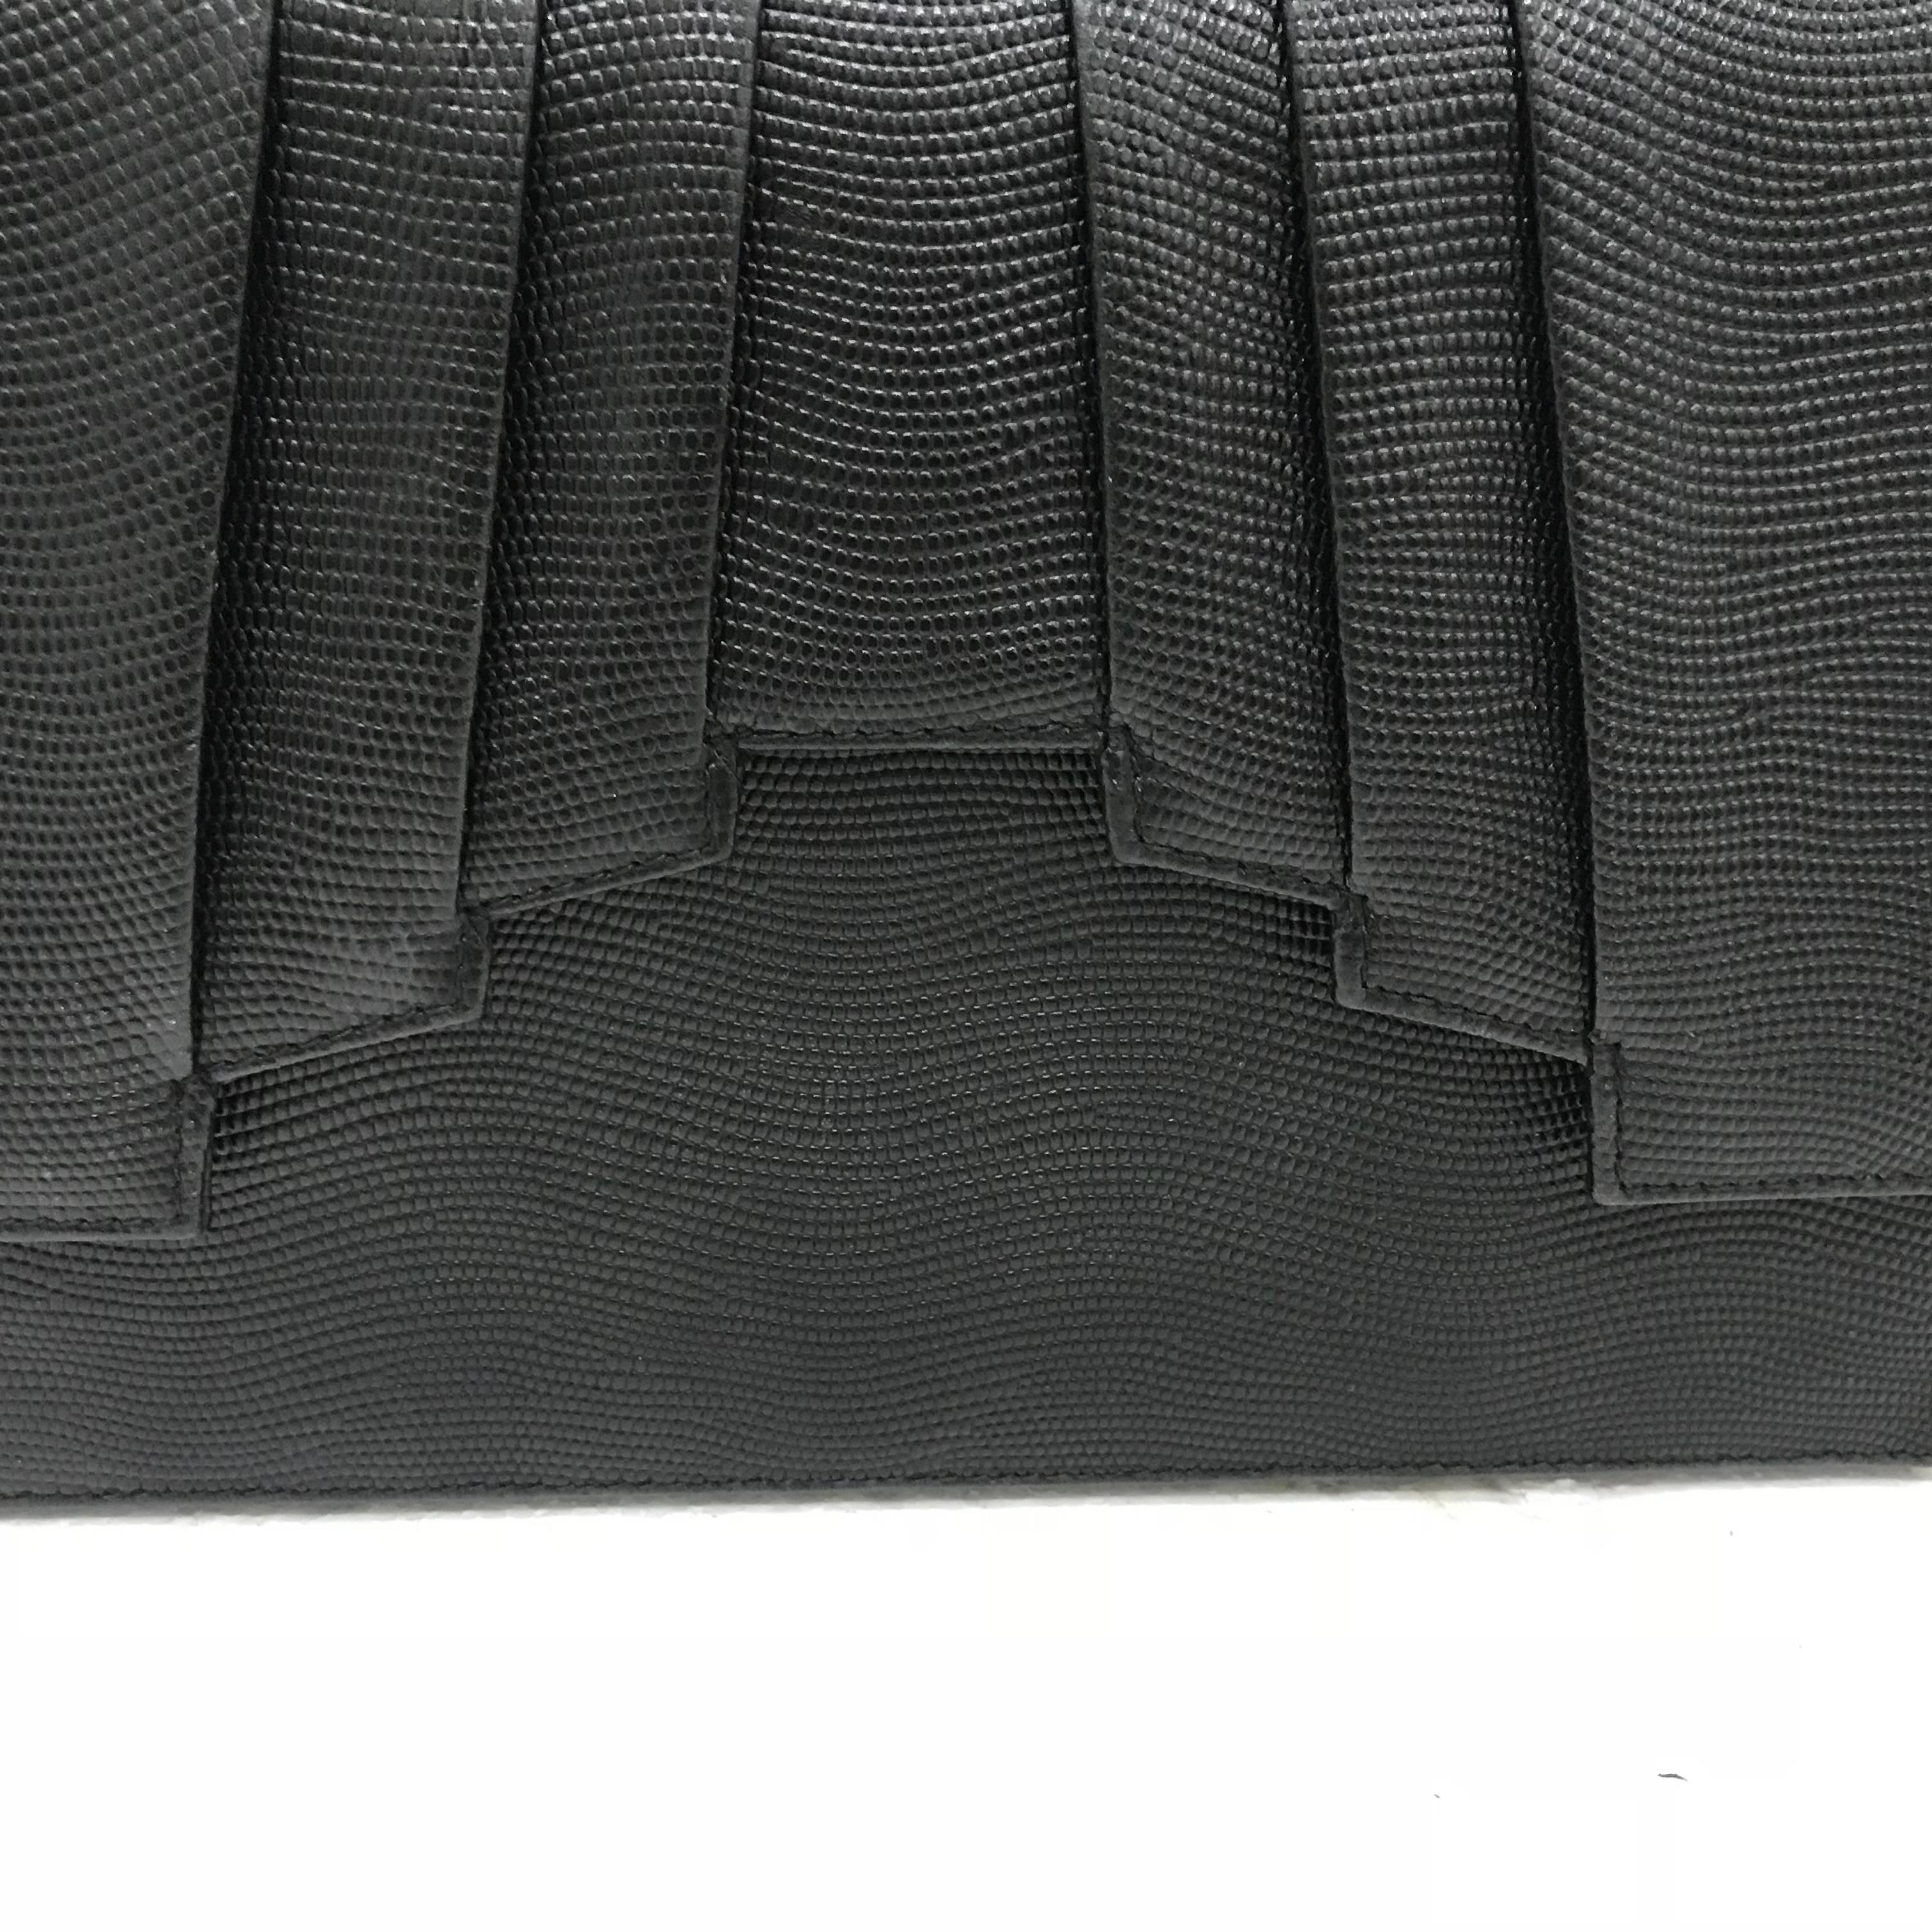 1990s Gianni Versace Couture Black Leather Vintage Shoulder Bag  For Sale 4